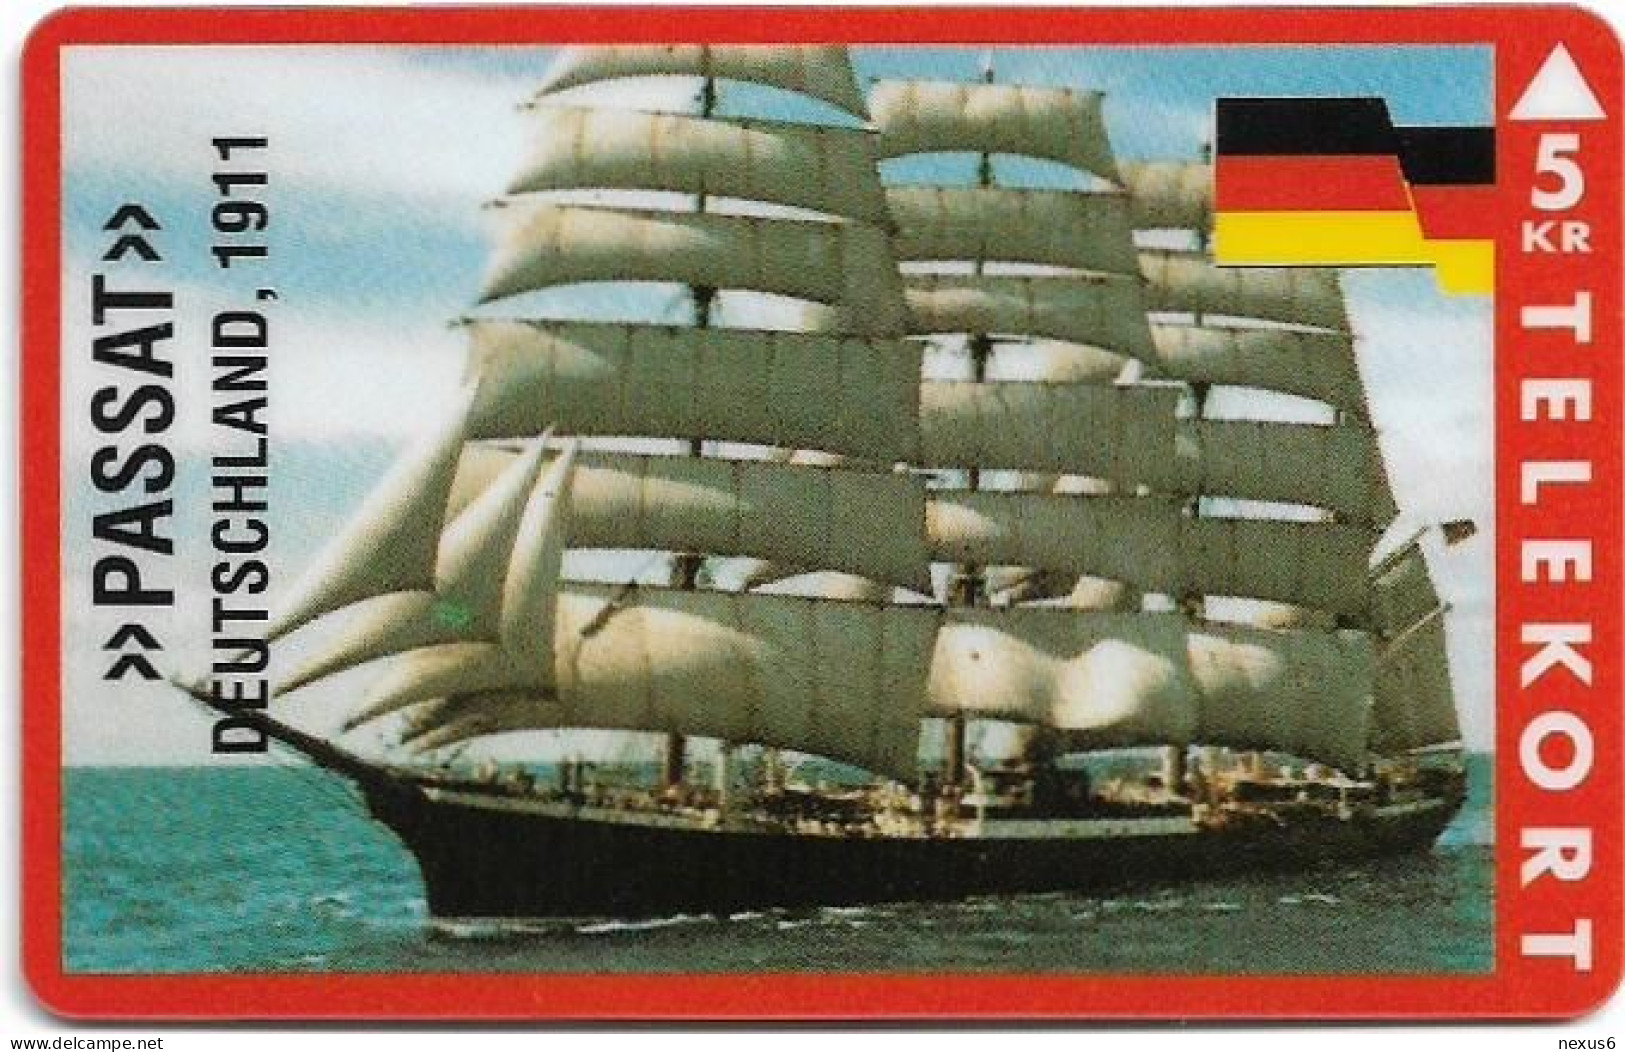 Denmark - KTAS - Ships (Red) - Germany - Passat - TDKP147 - 05.1995, 5kr, 1.500ex, Used - Denemarken